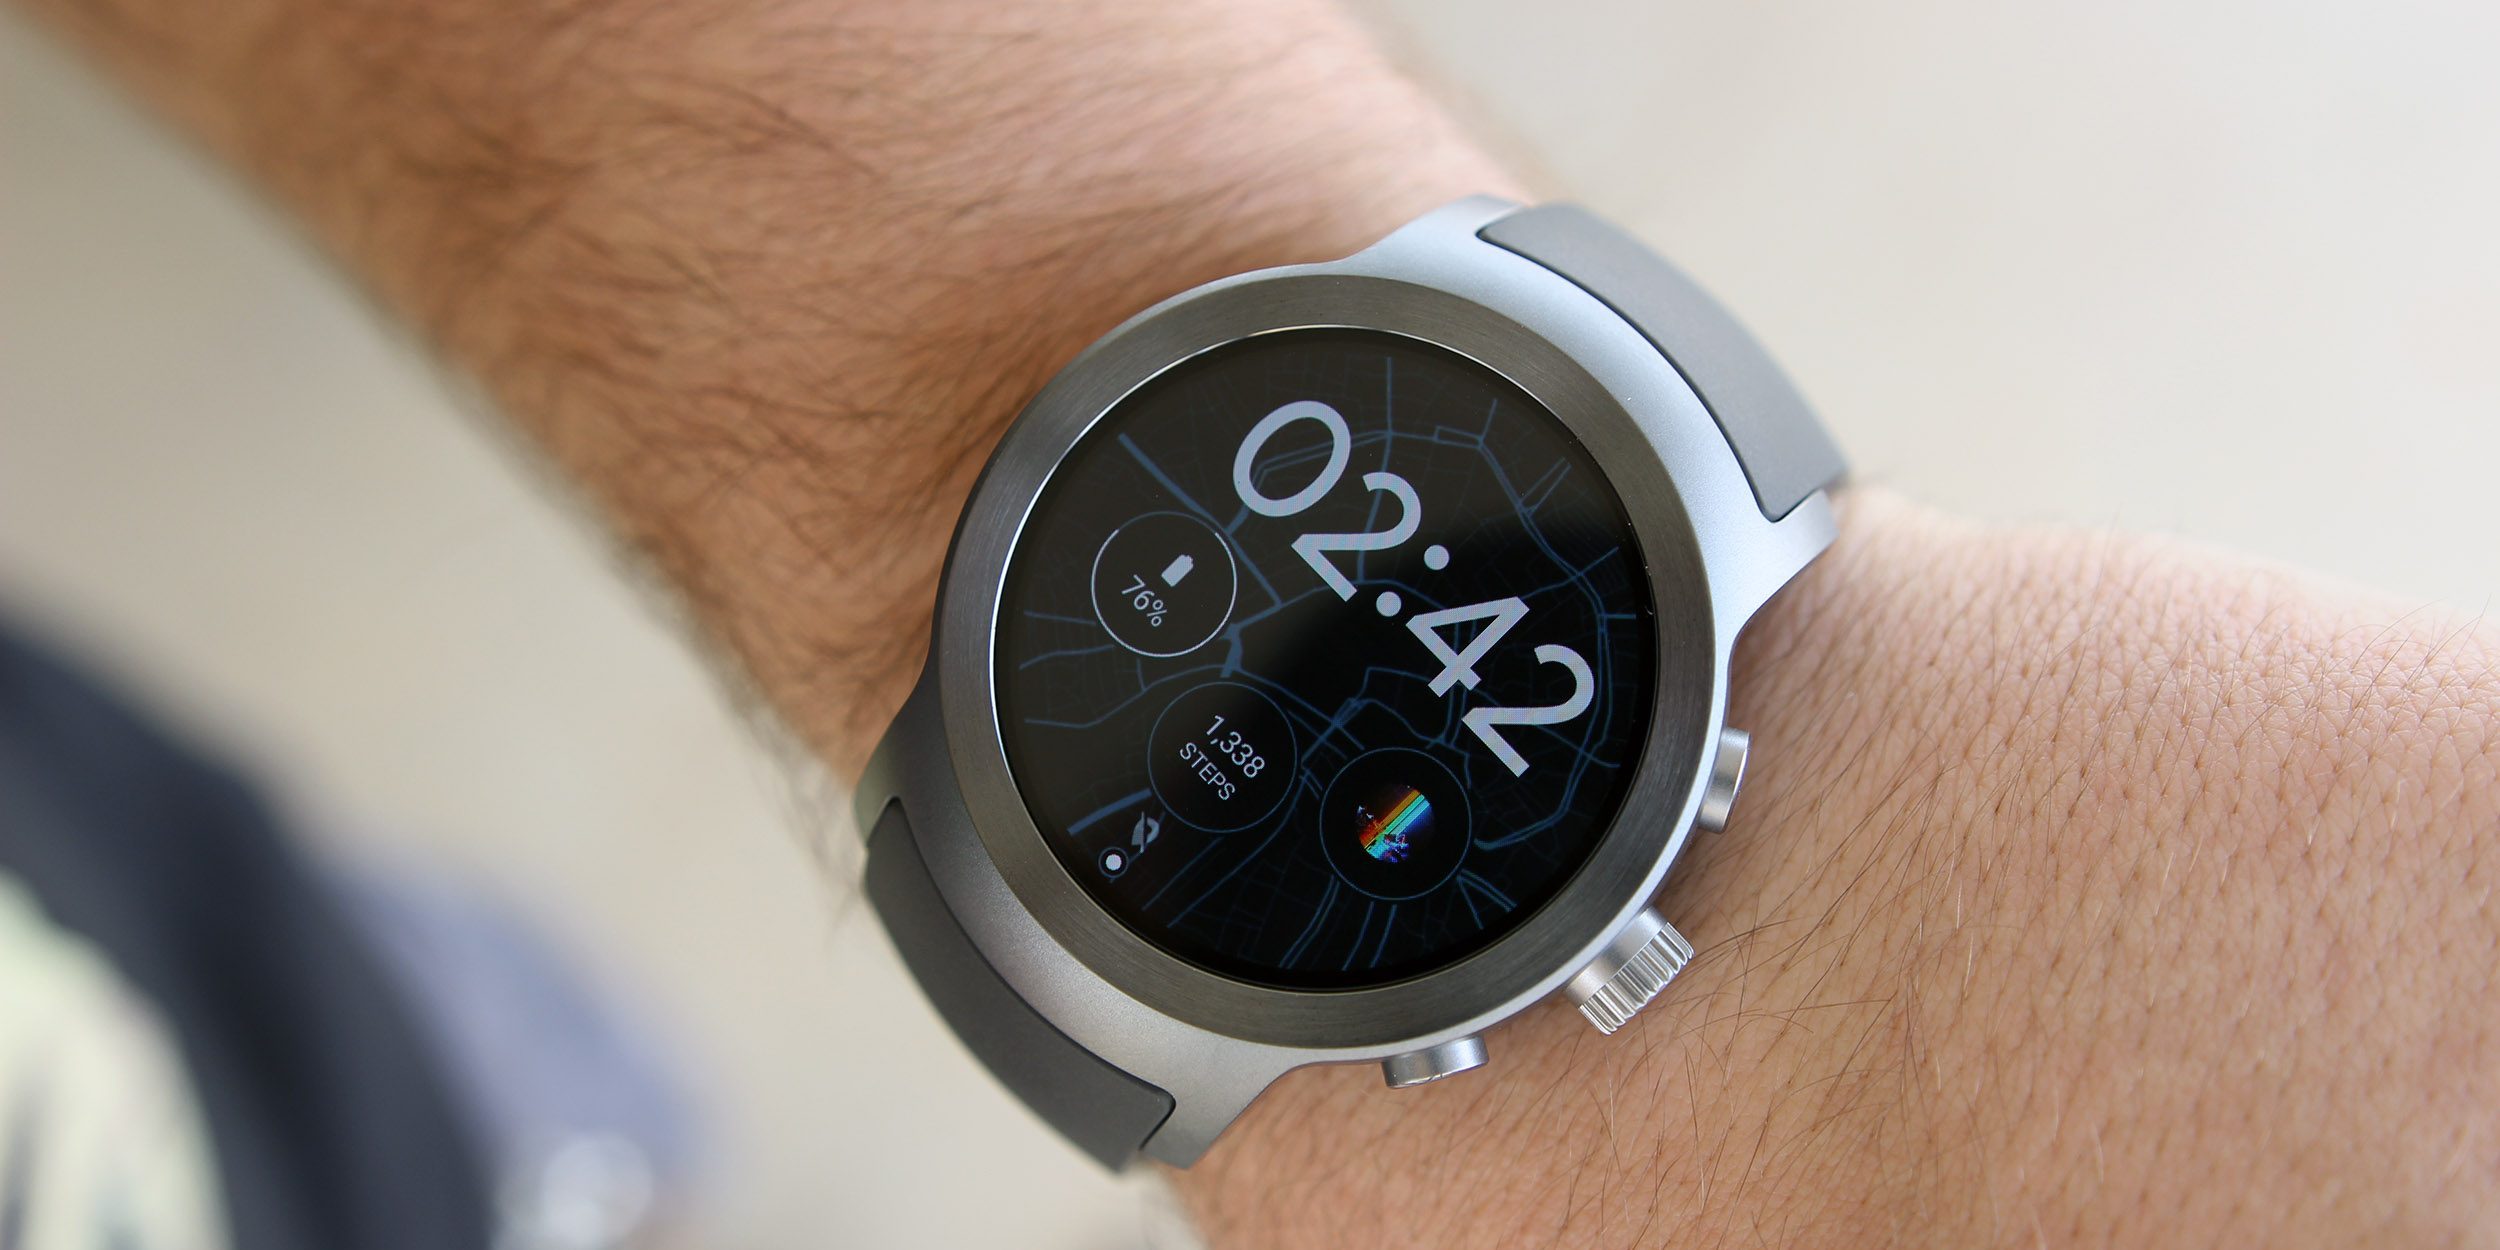 New LG smartwatch revealed by FCC ahead 